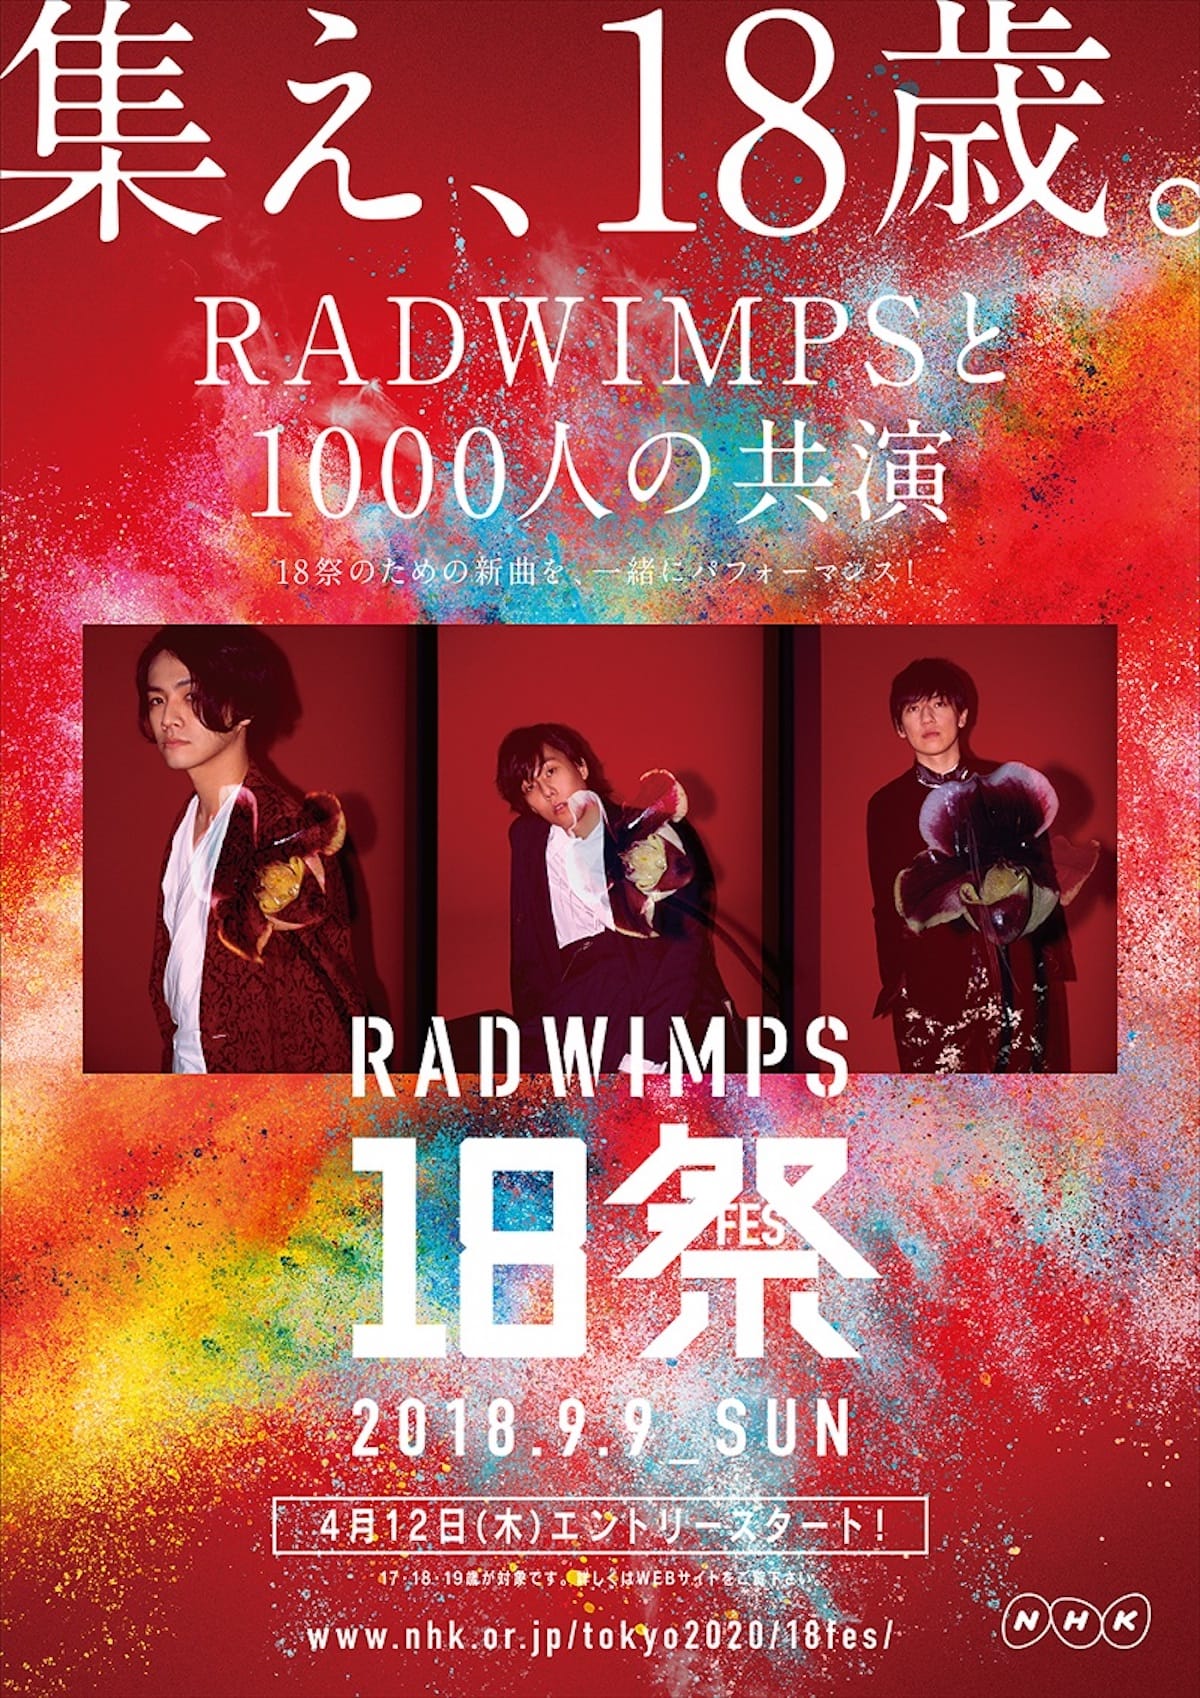 RADWIMPS18祭